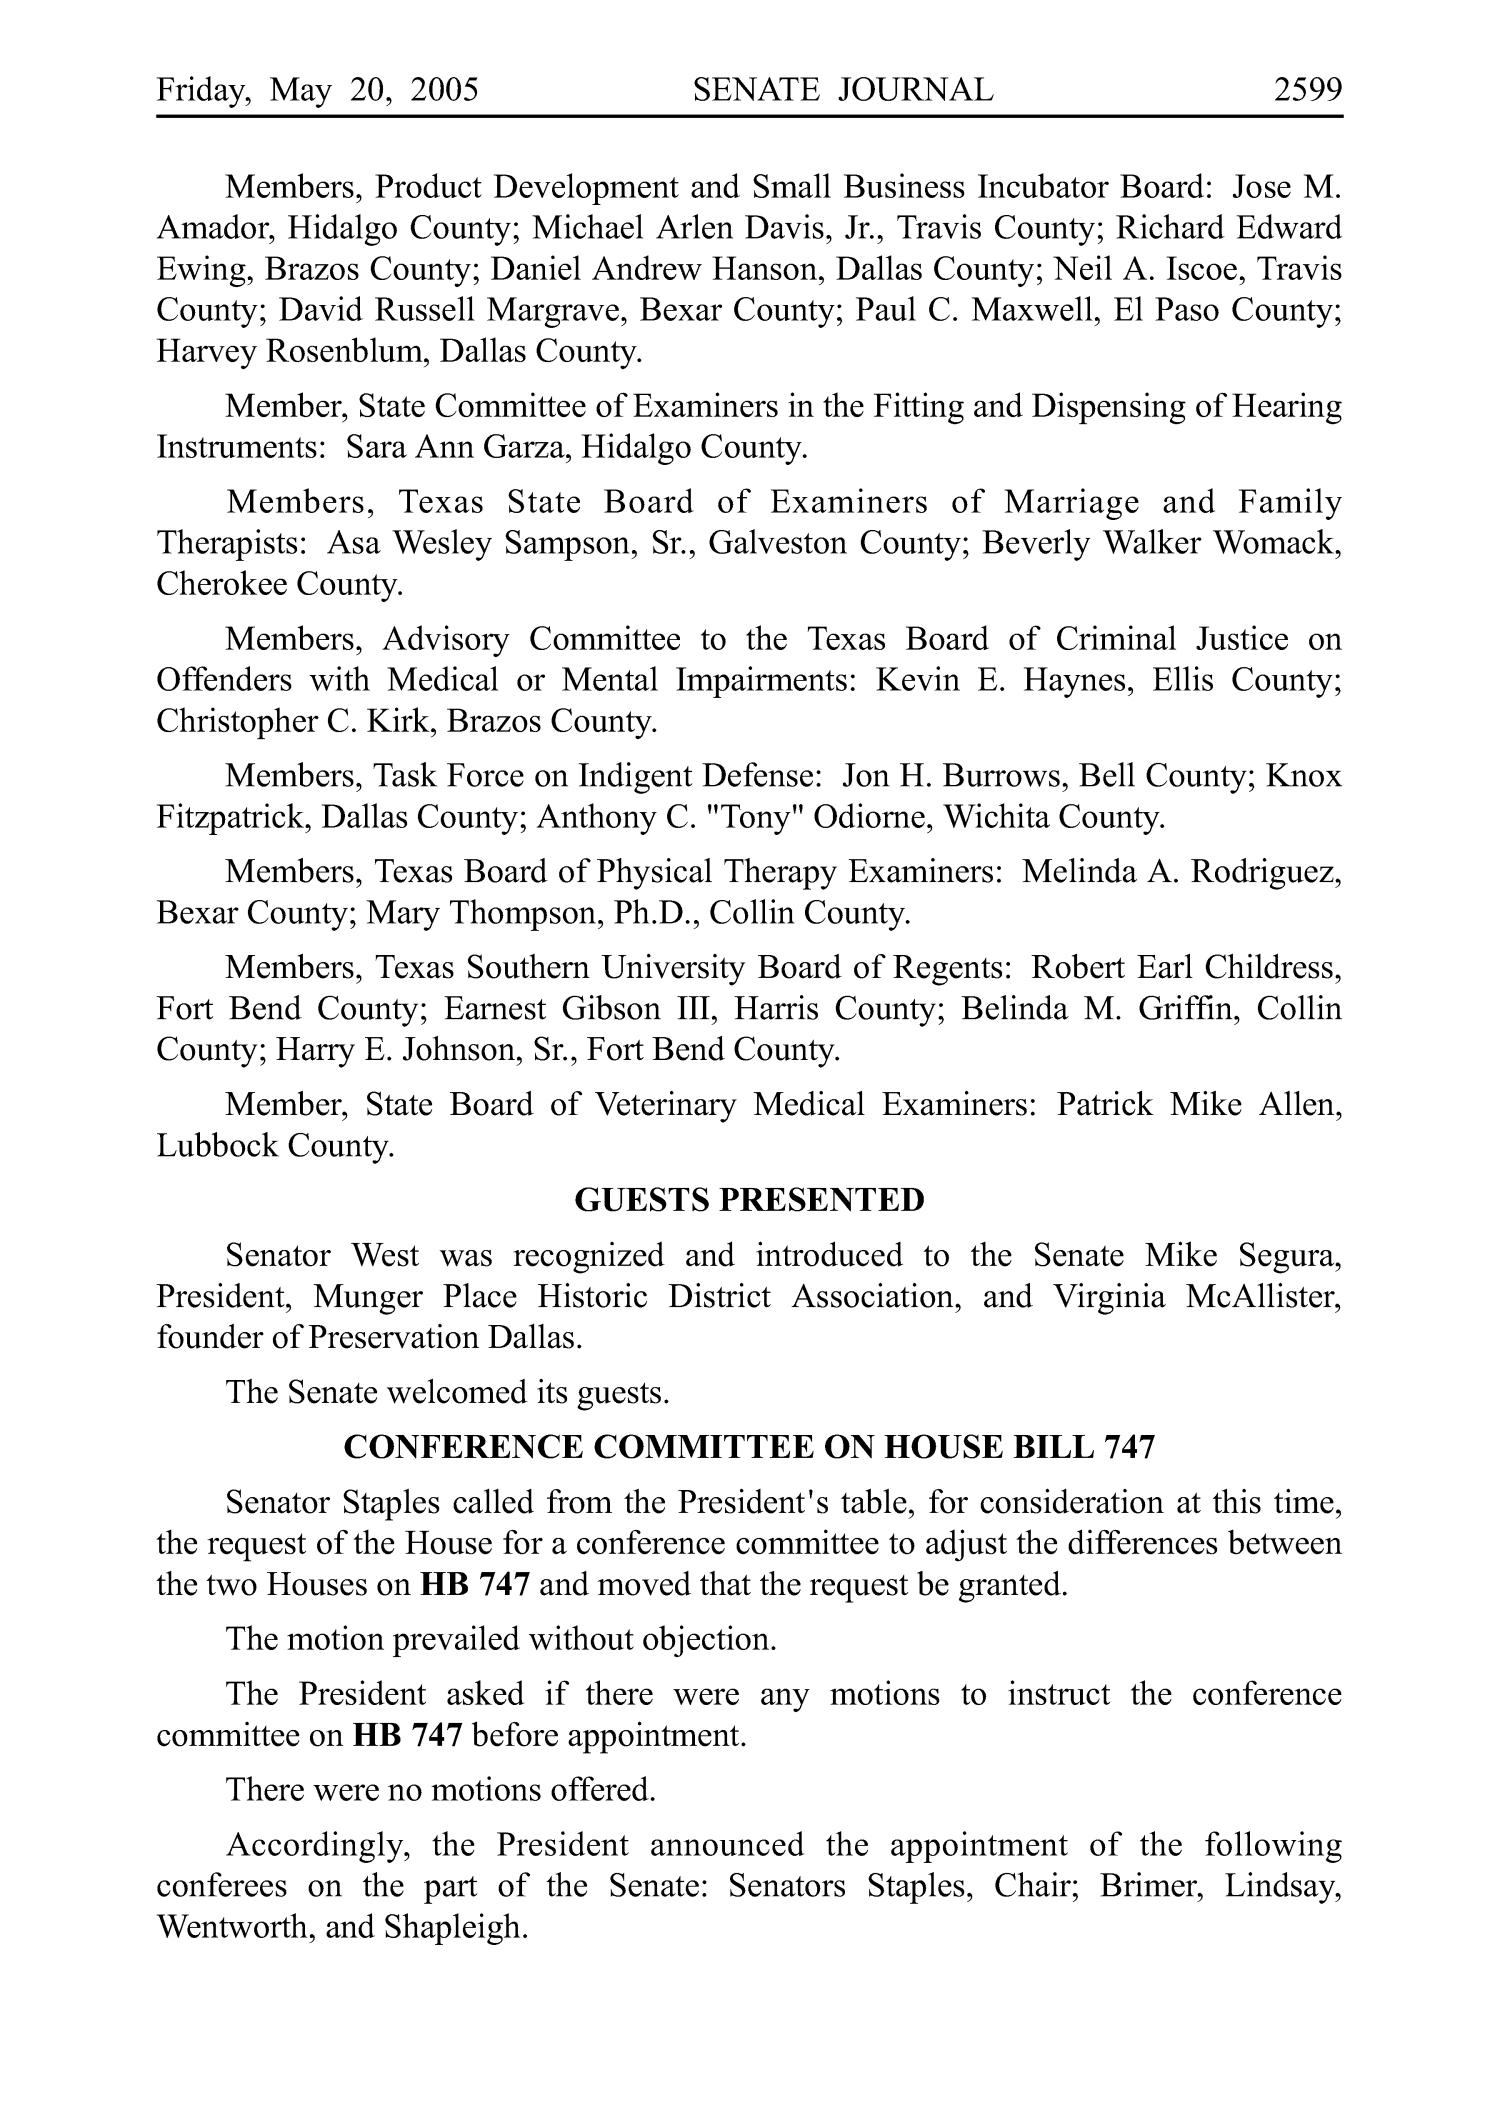 Journal of the Senate, Regular Session of the Seventy-Ninth Legislature of the State of Texas, Volume 3
                                                
                                                    2599
                                                